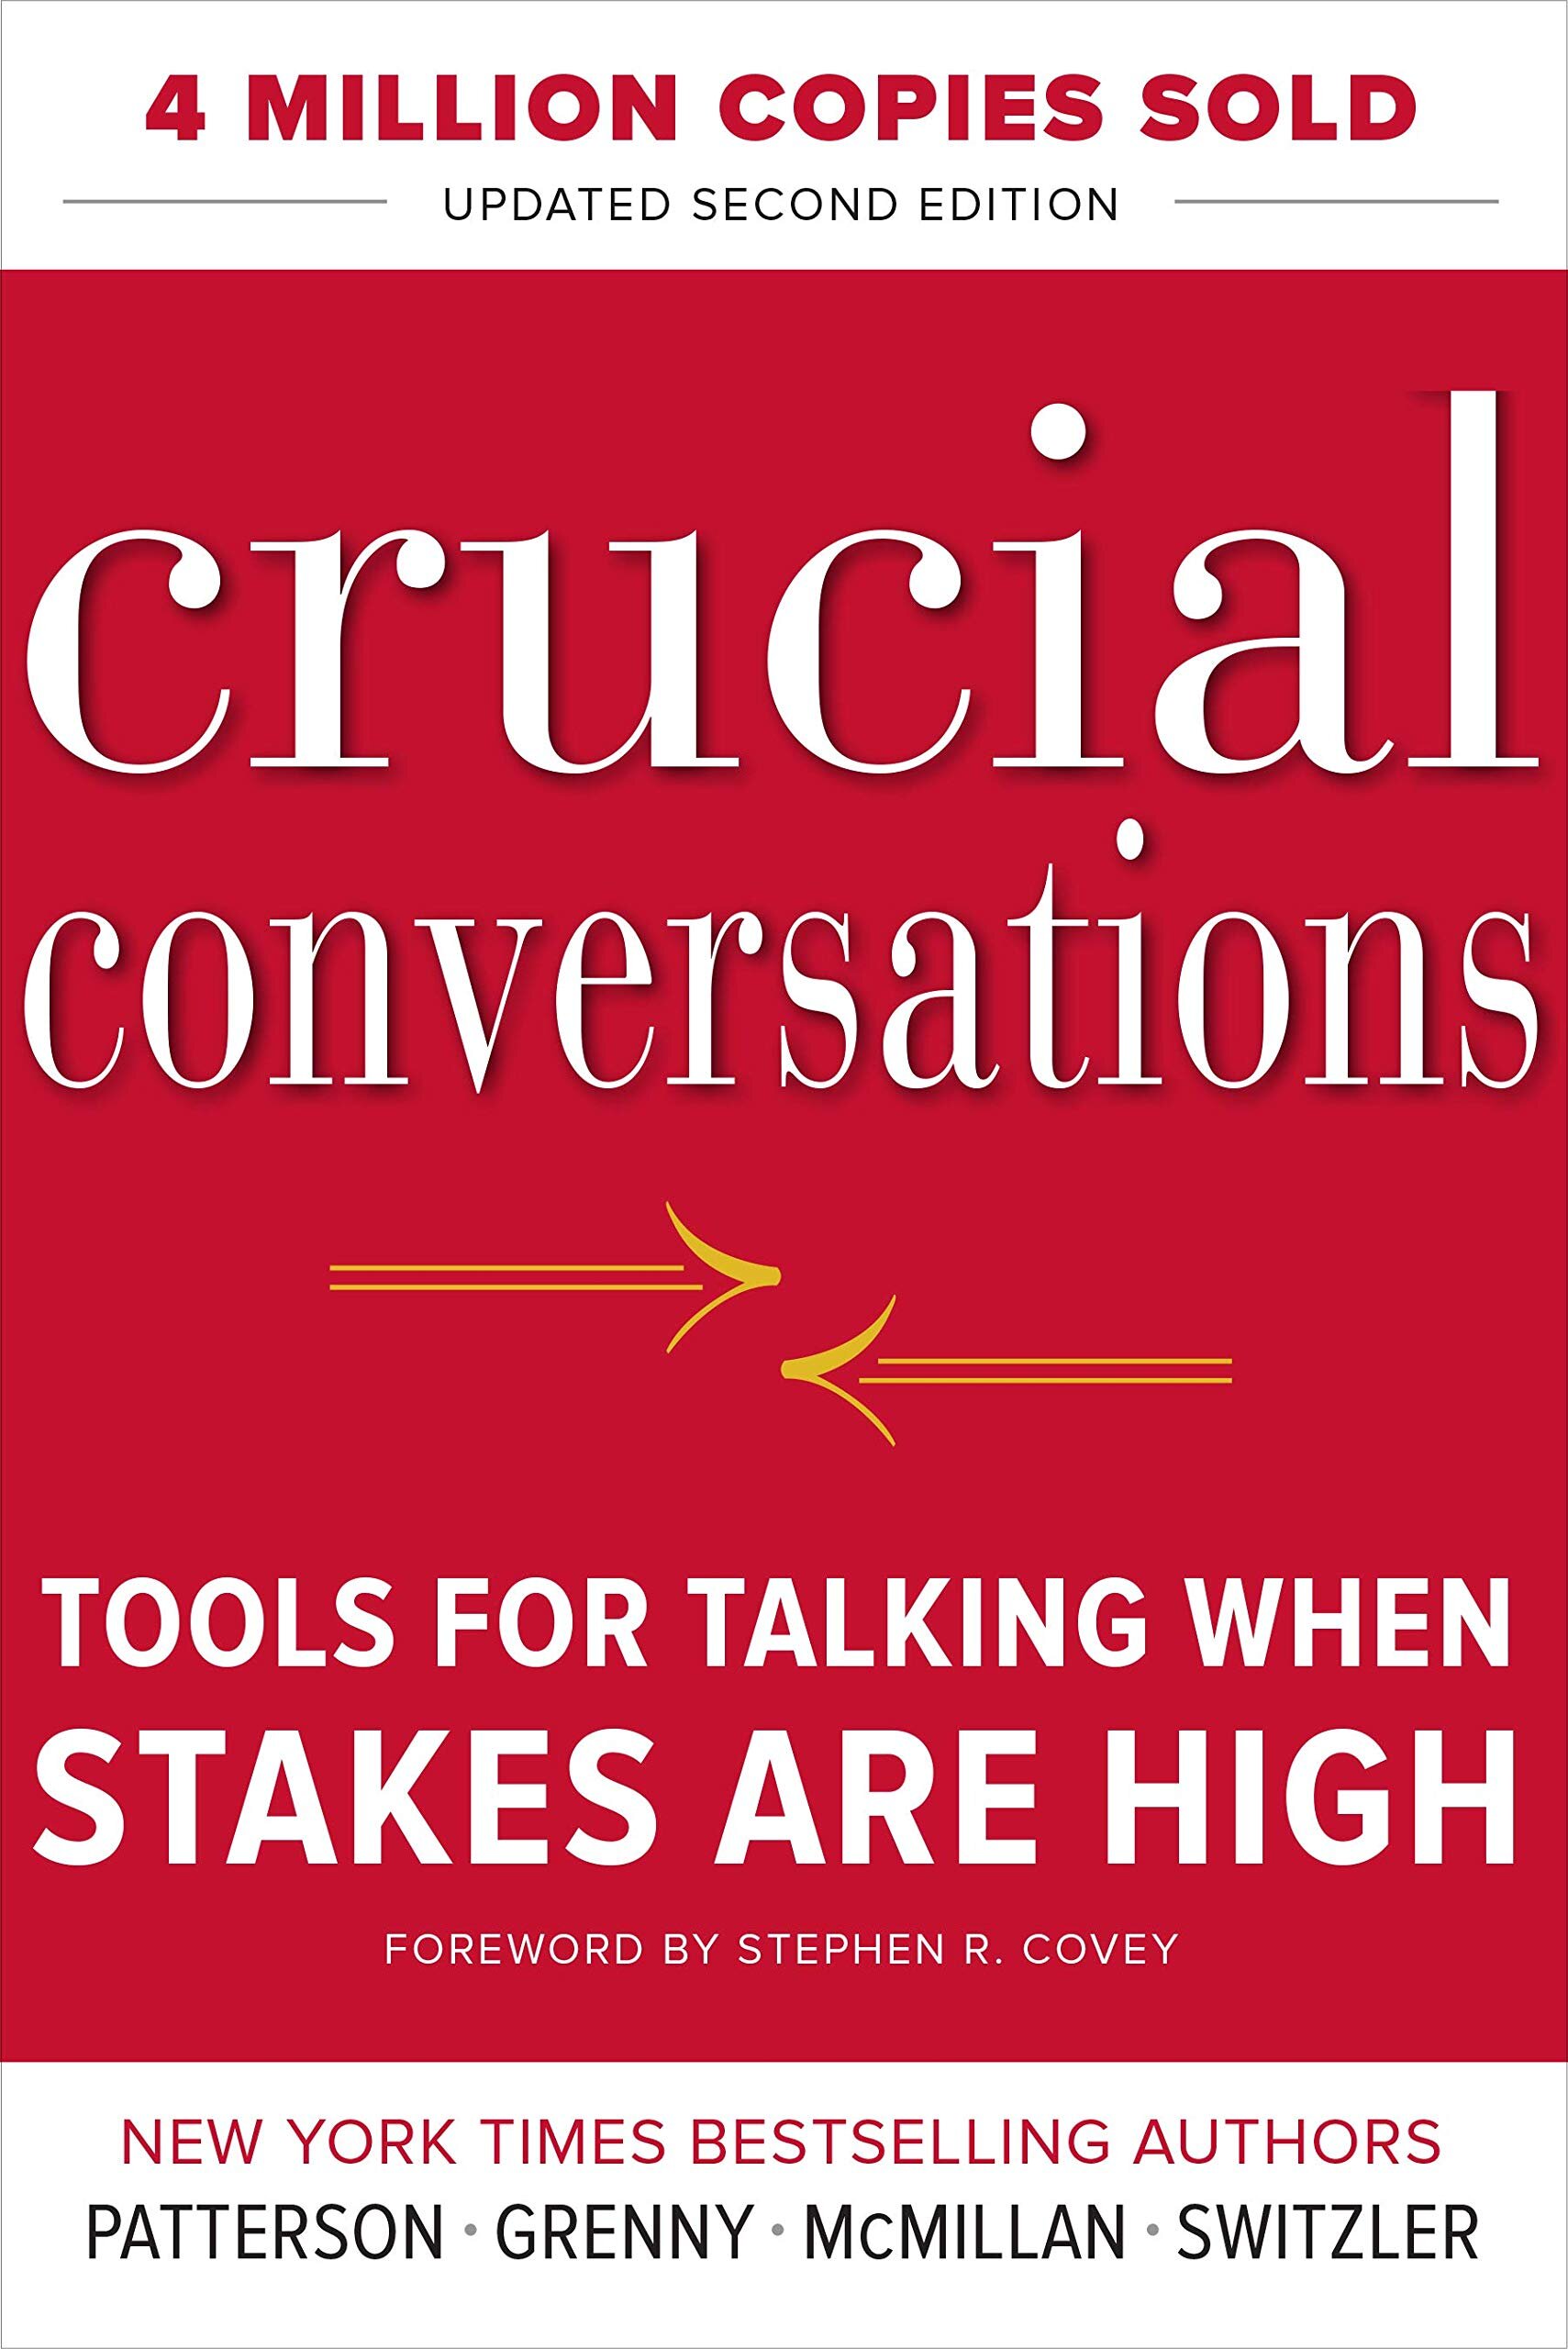 Crucial Conversations - Kerry Patterson, Joseph Grenny, Ron McMillan, Al Switzler